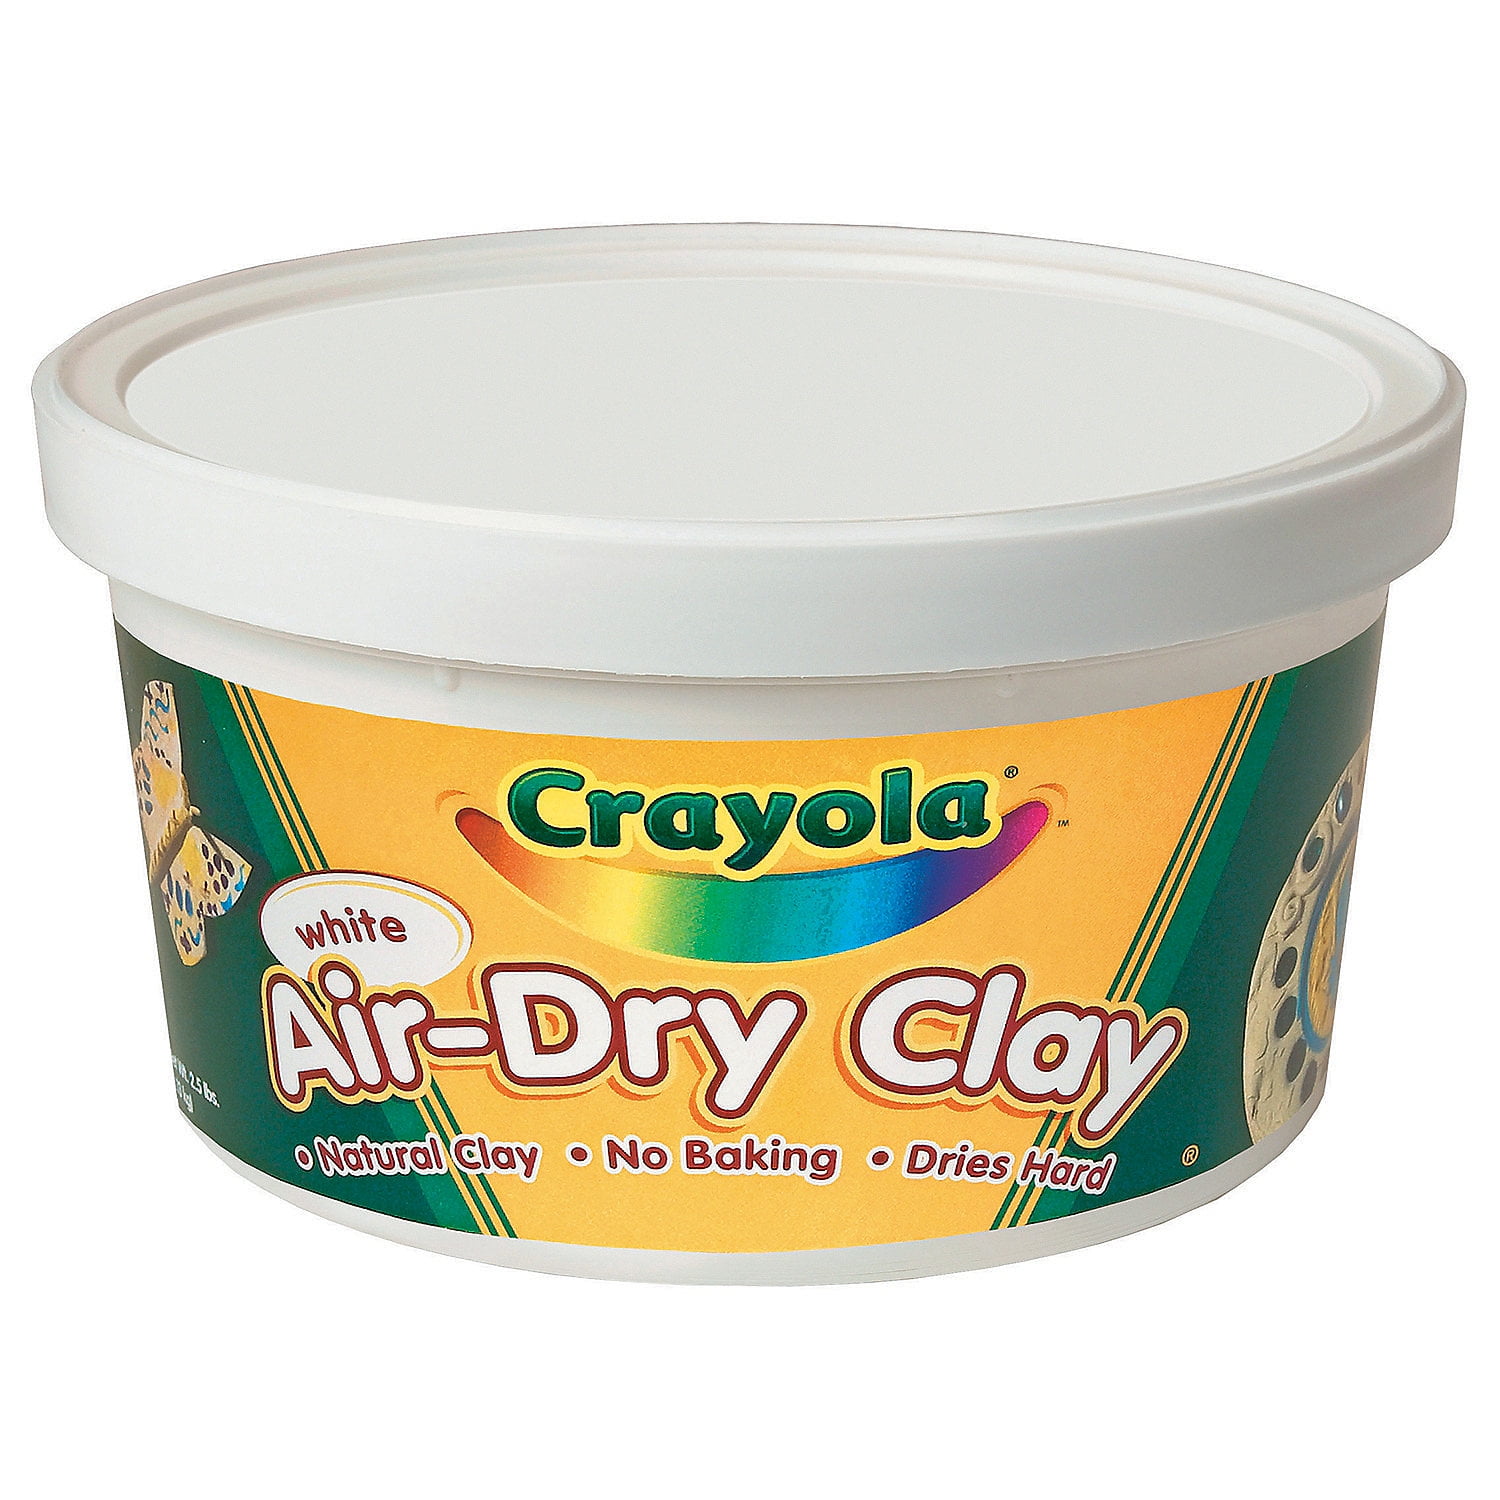 Crayola Air-Dry Clay 2.5 Lb Bucket White - Basic Supplies - 1 Piece 